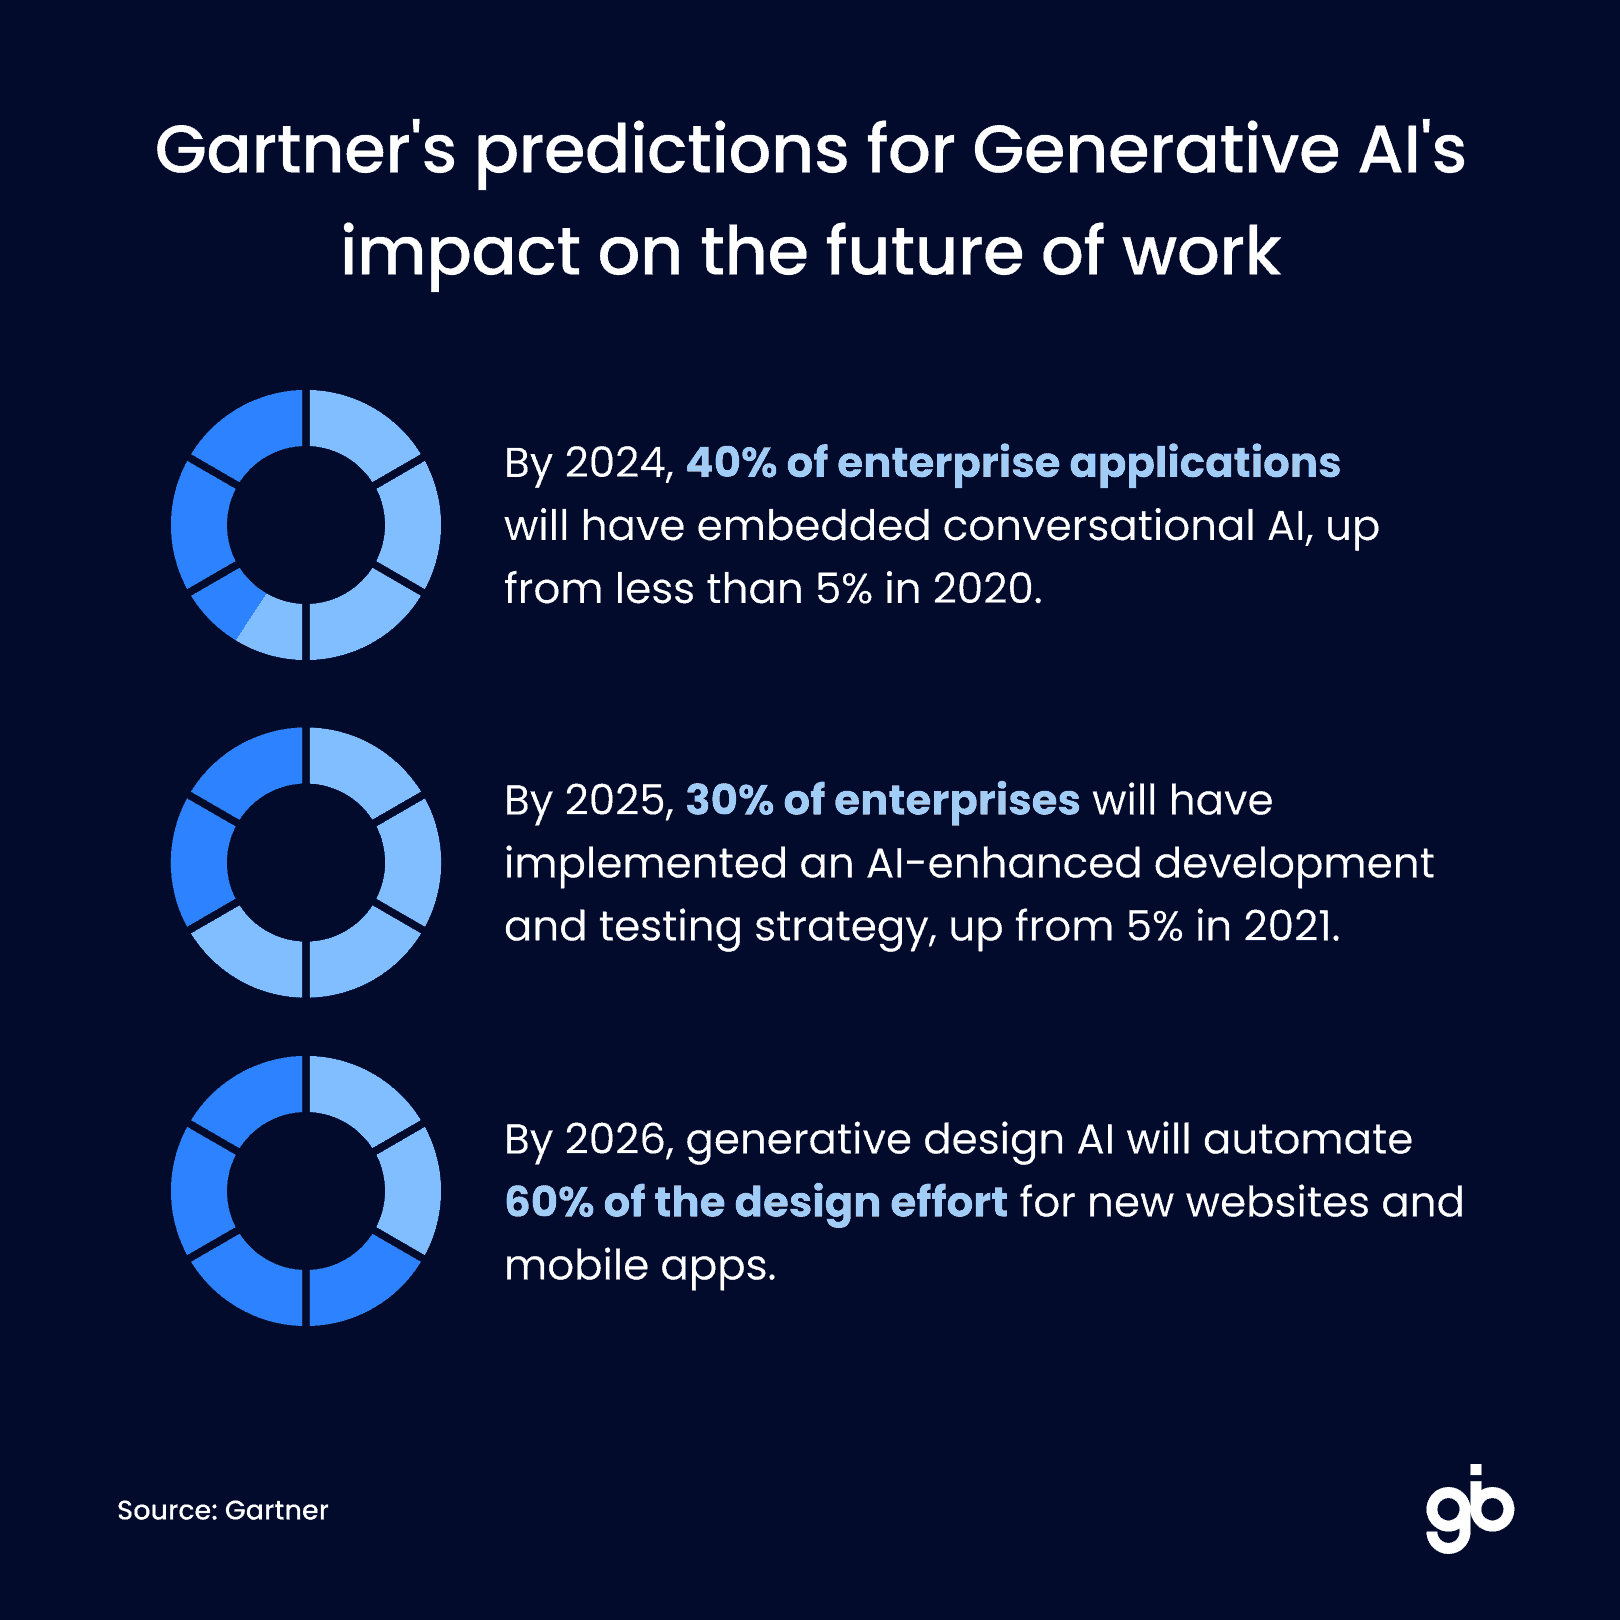 Generative AI statistics